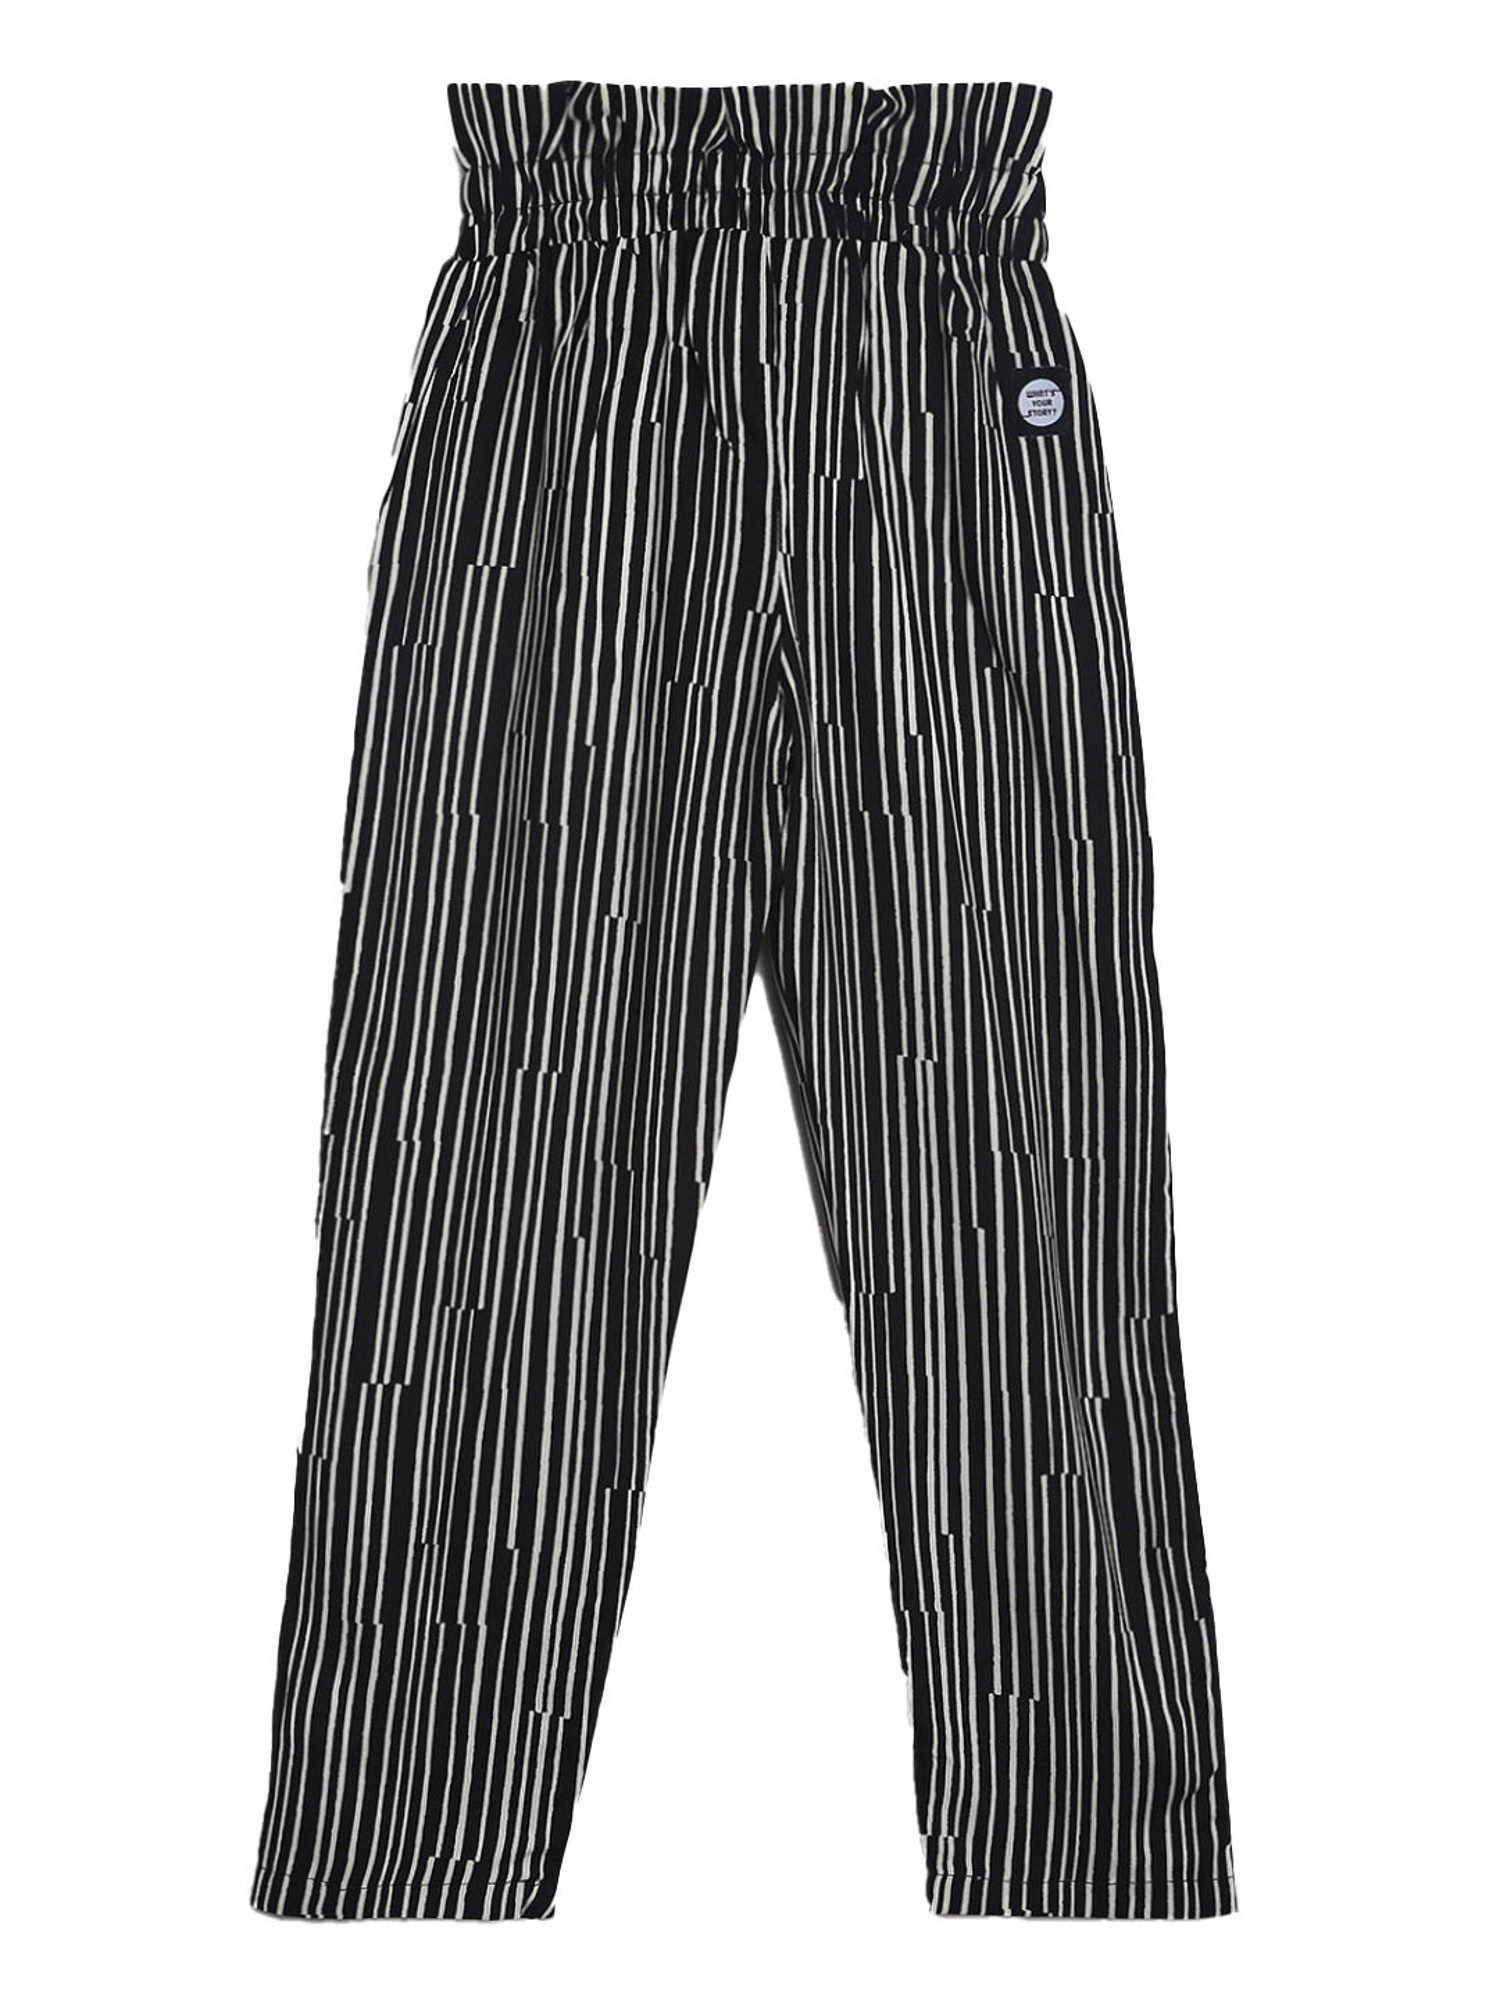 Details 207+ black striped pants